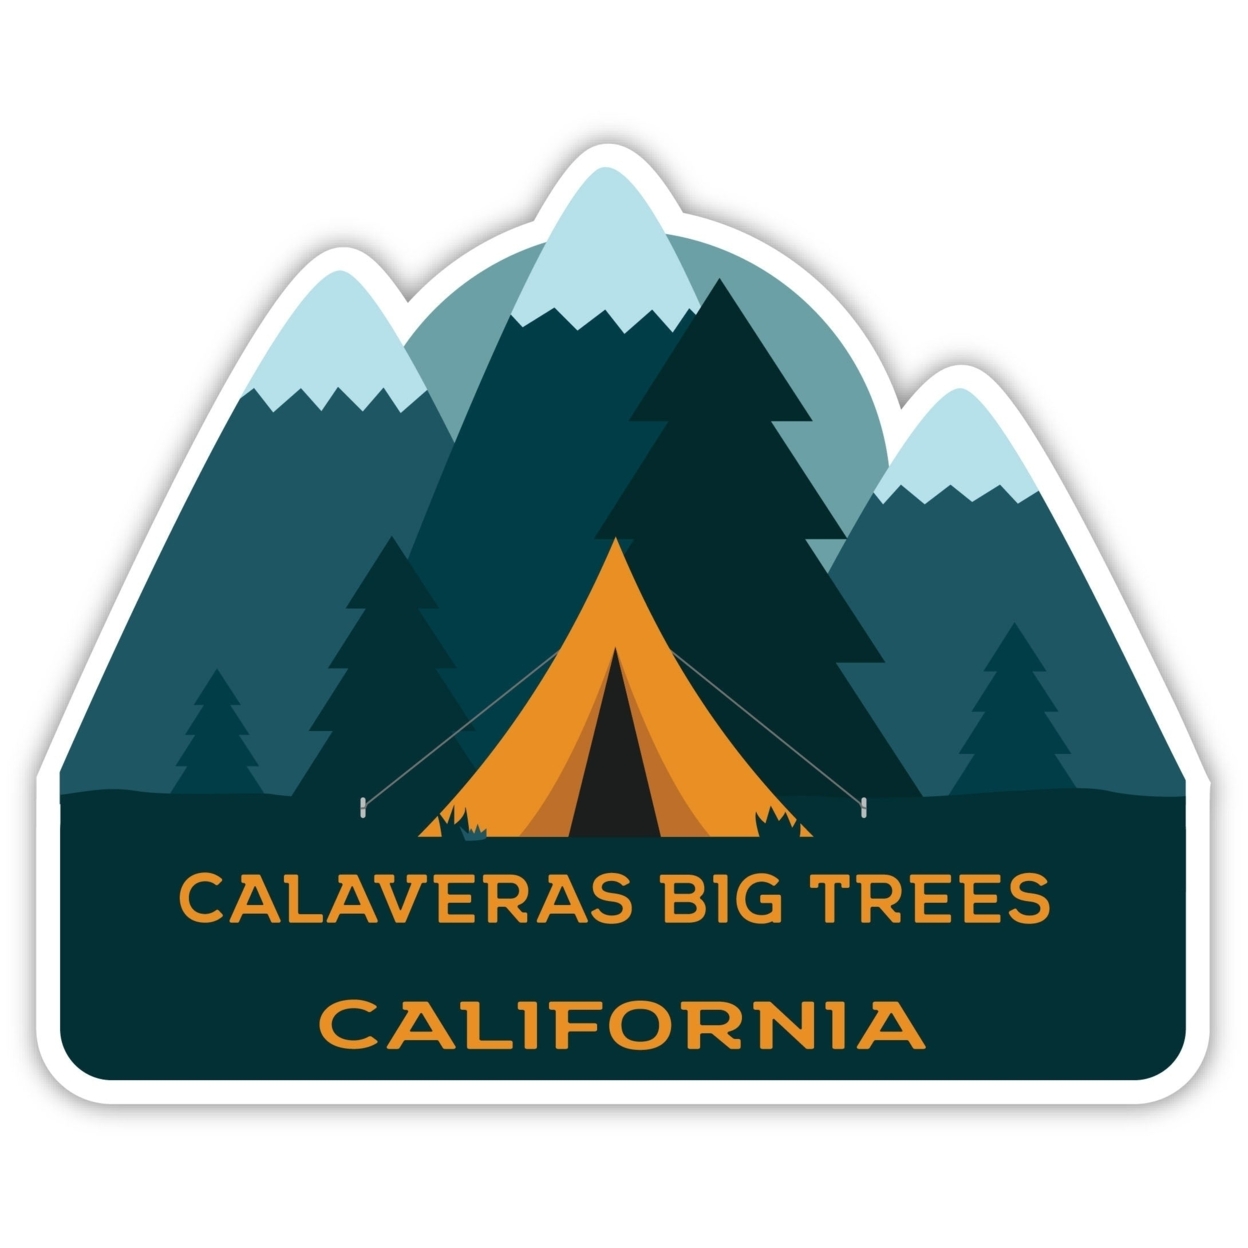 Calaveras Big Trees California Souvenir Decorative Stickers (Choose Theme And Size) - Single Unit, 10-Inch, Camp Life